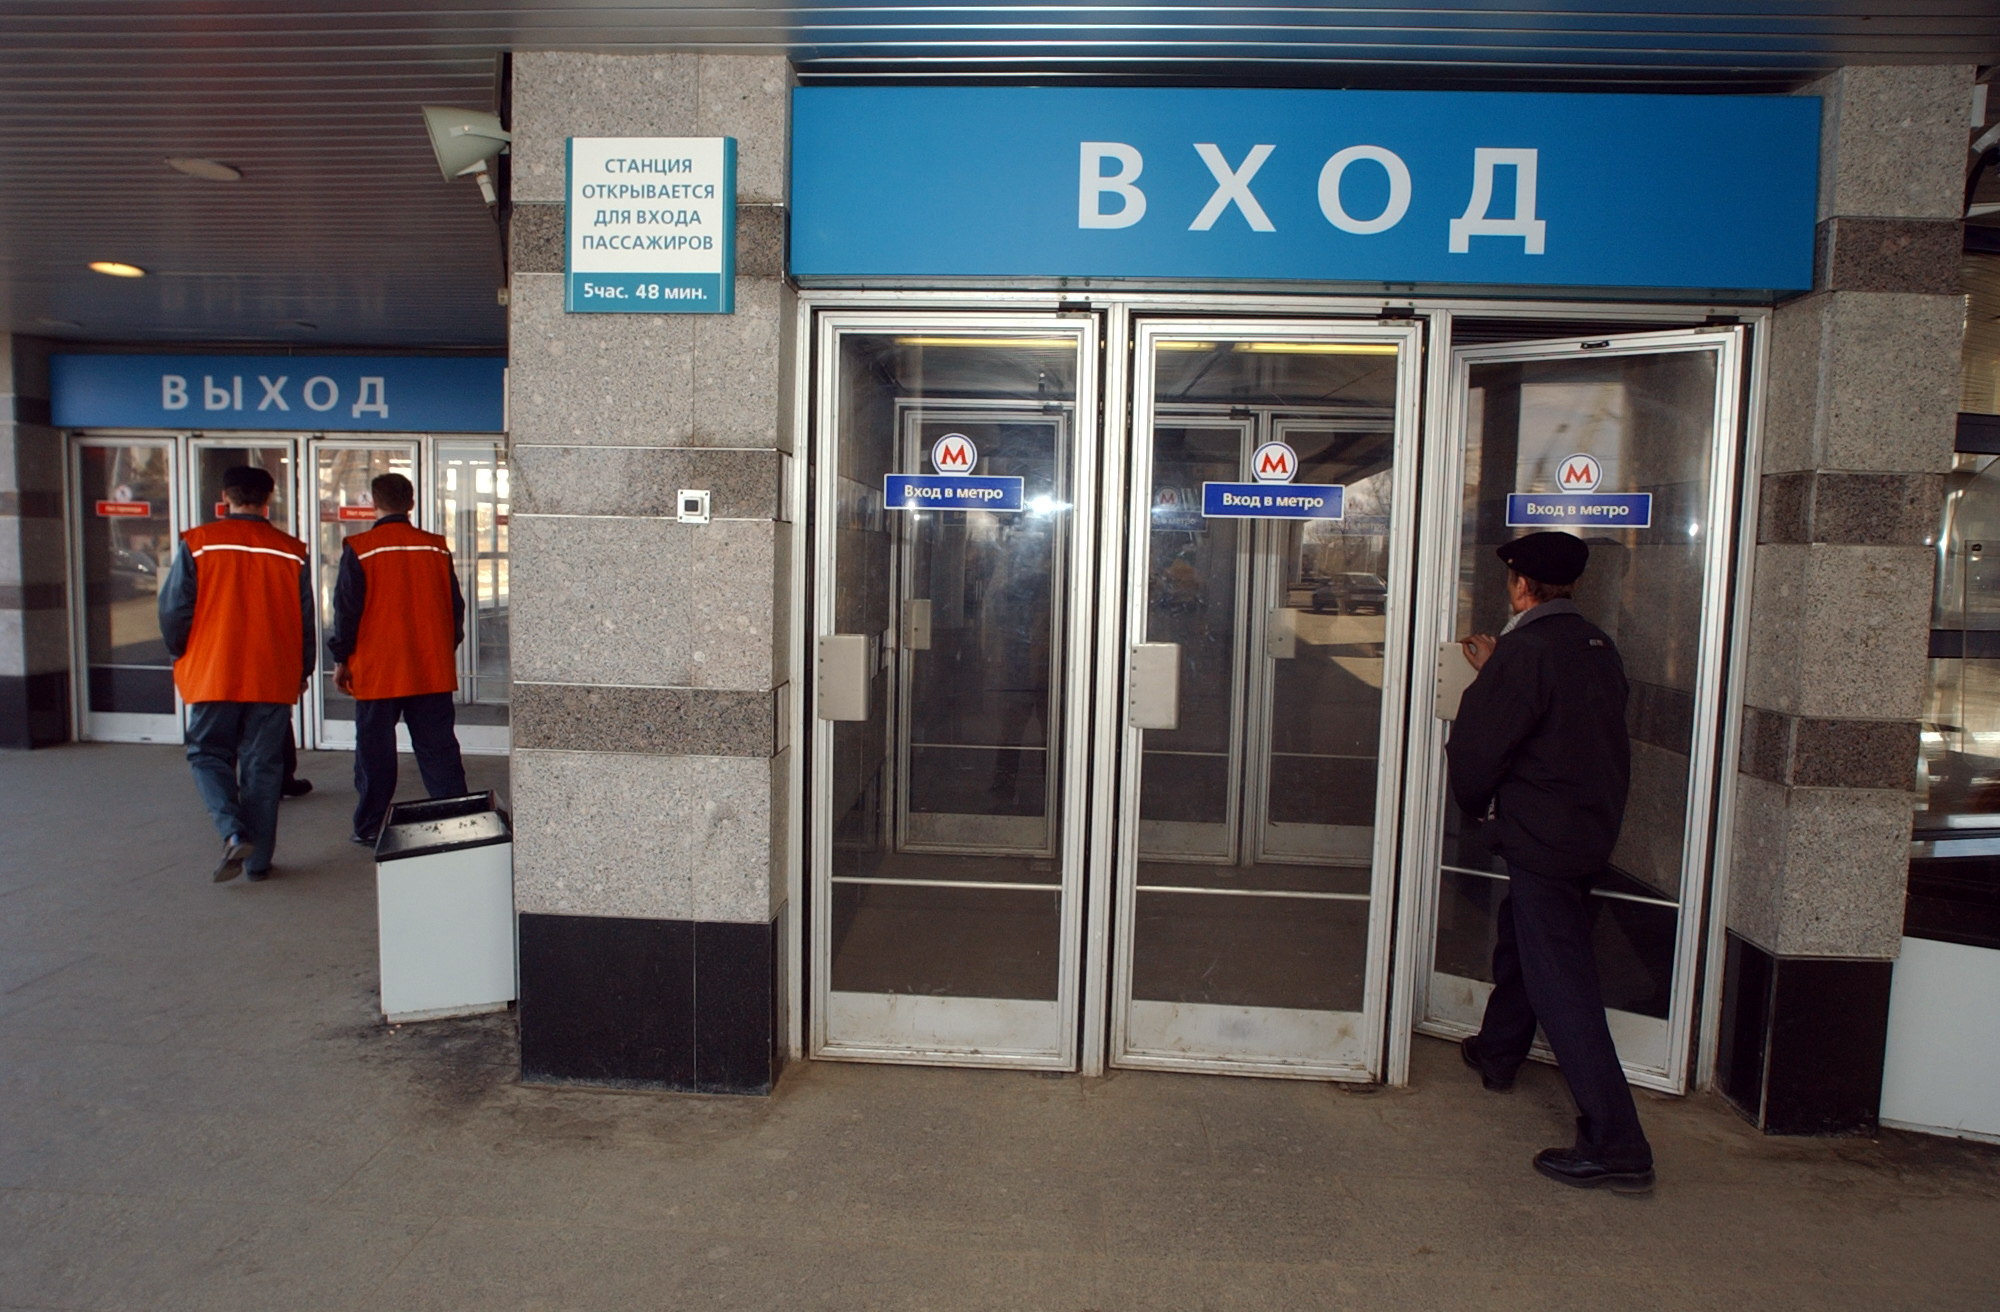 Вход выход в автобусе. Двери метро. Метро дверь Москва. Вход в метро. Двери в вестибюле метро.